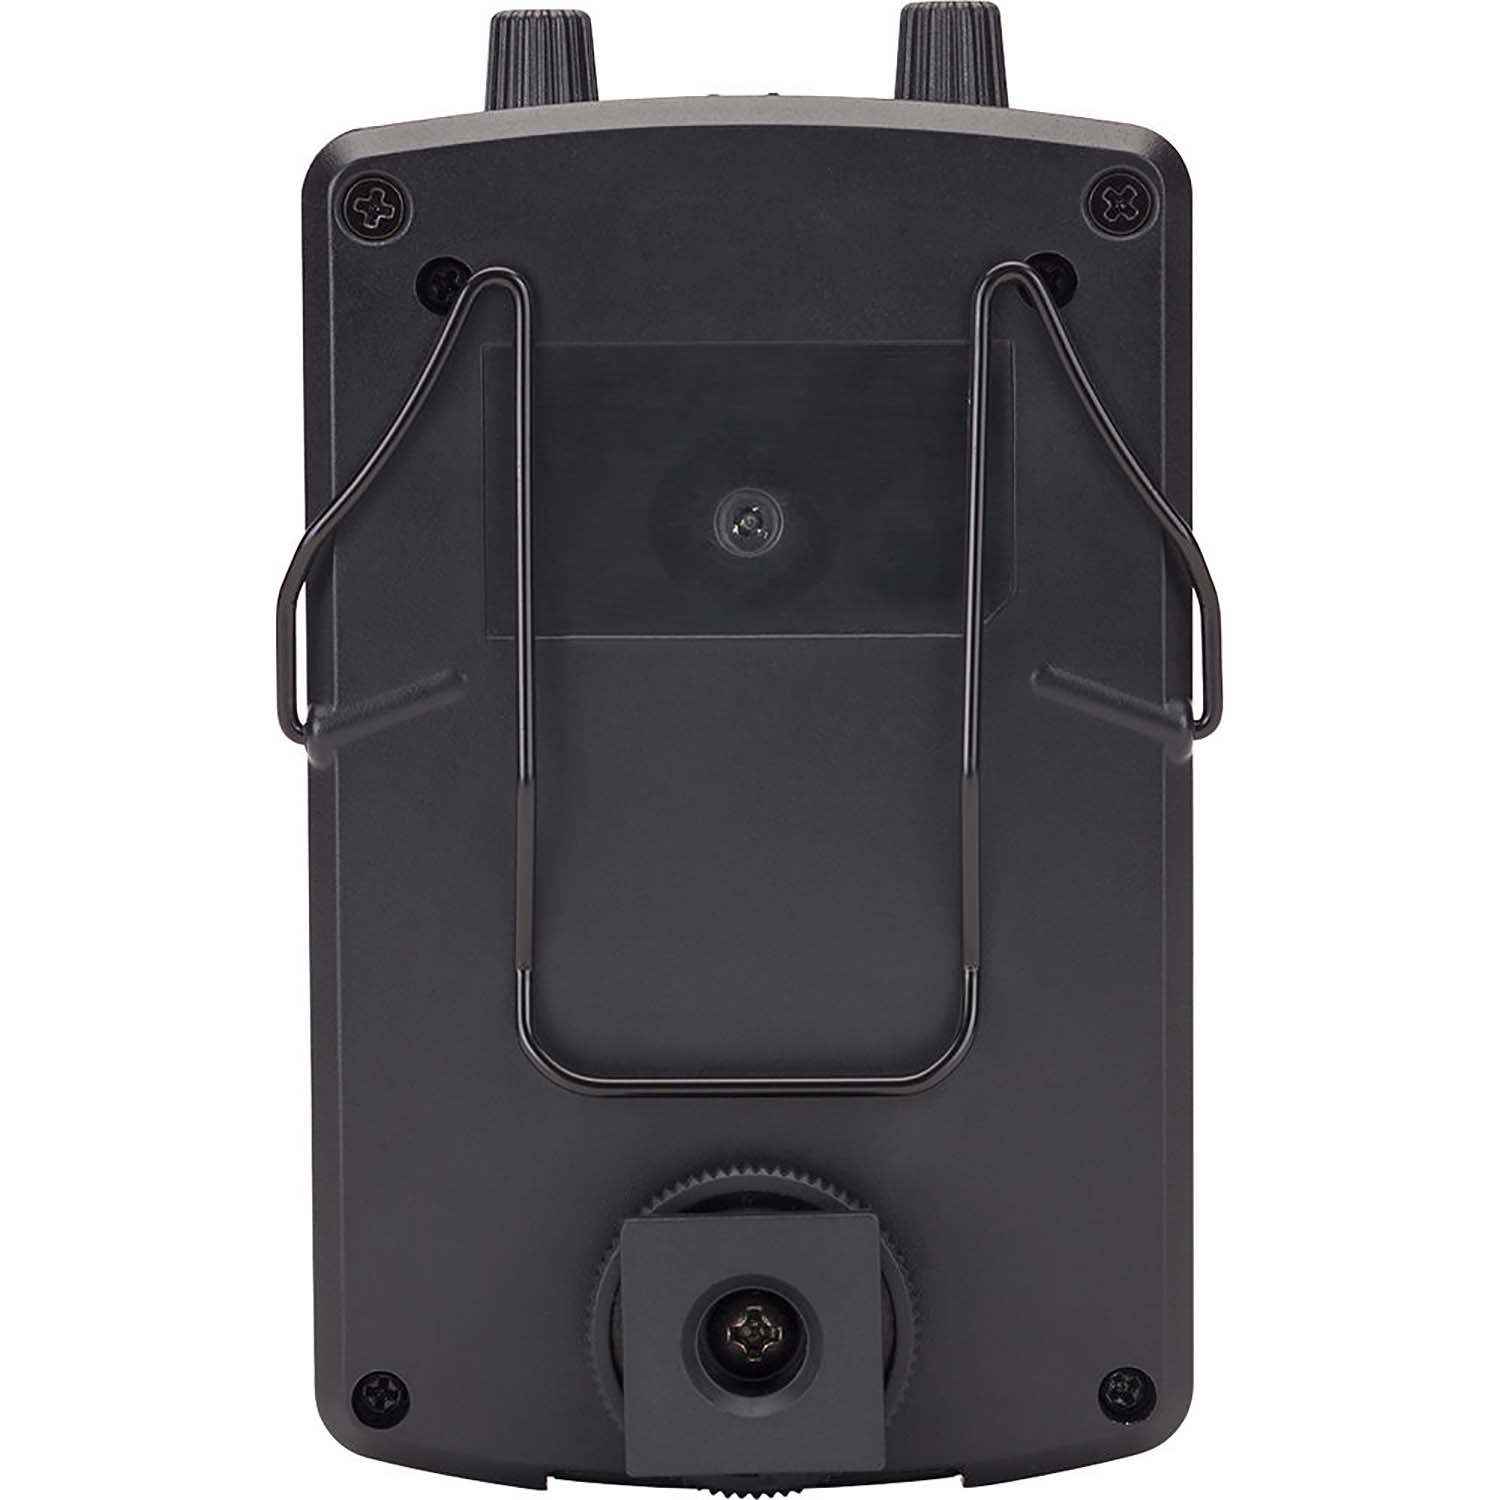 Samson CR88XV Camera-Mount Wireless Receiver - Hollywood DJ